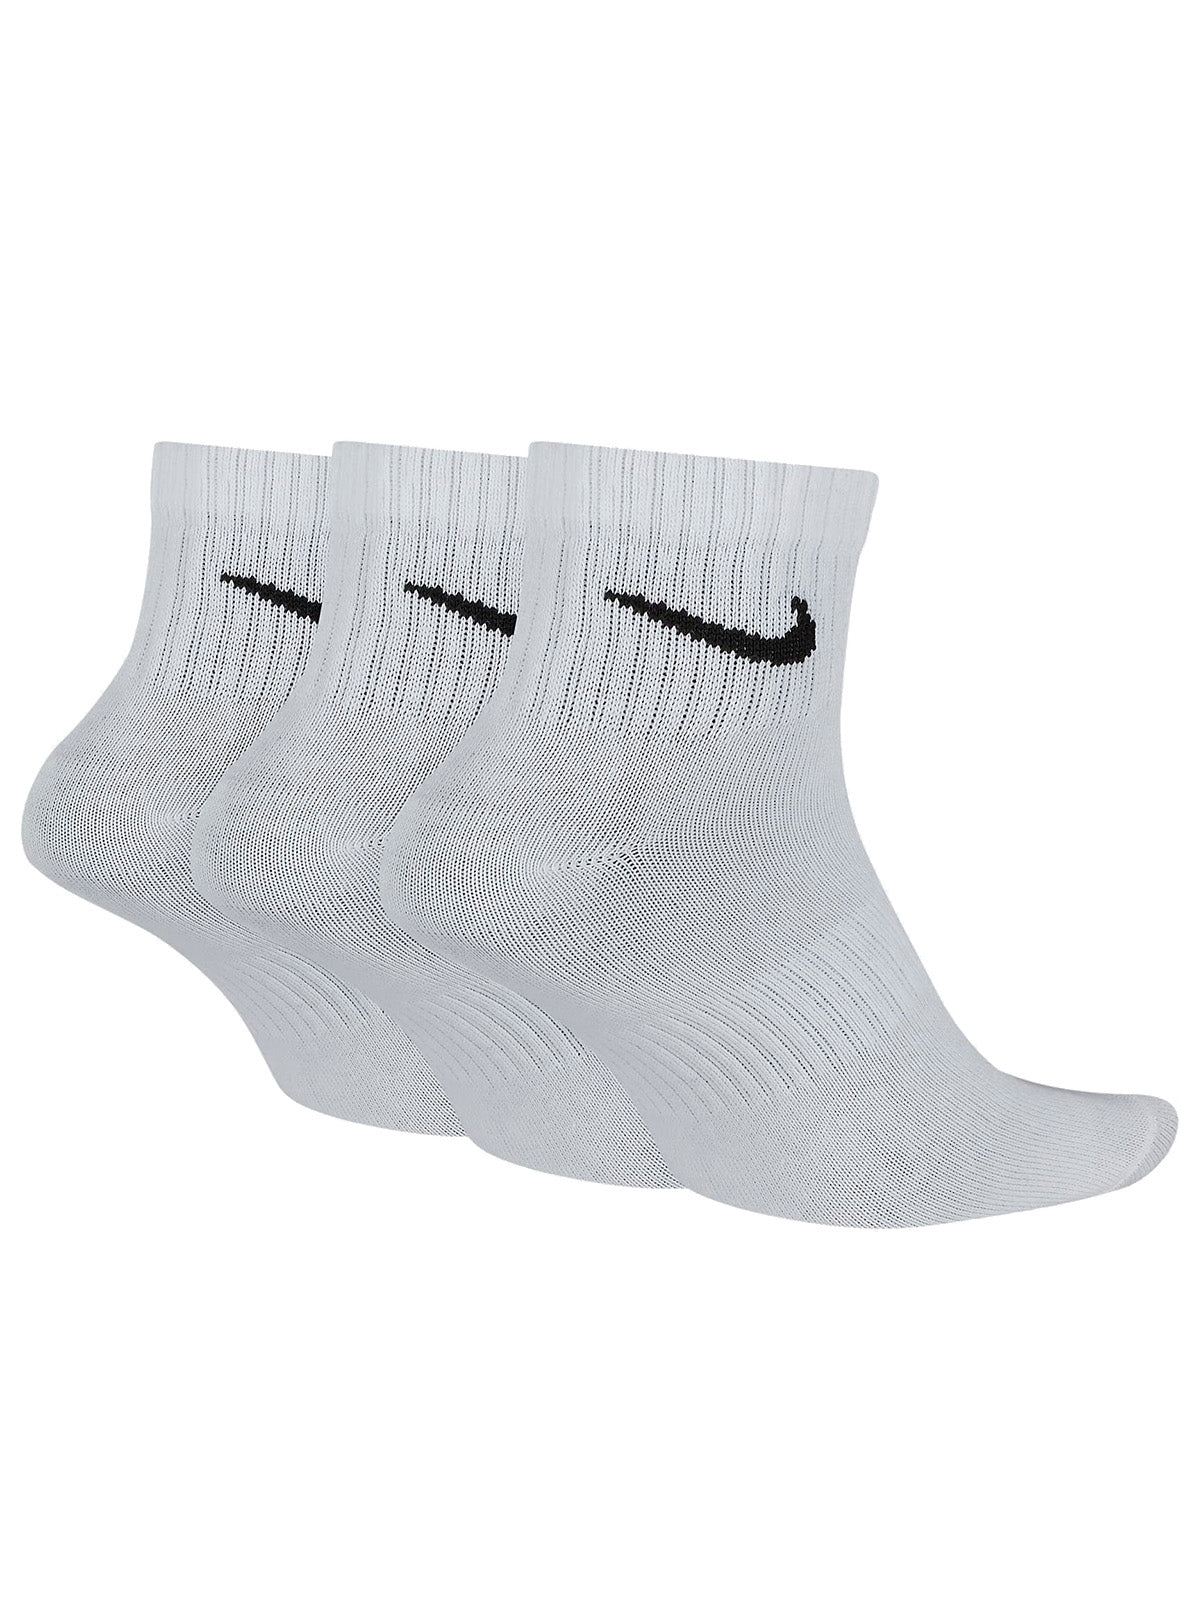 Calze sportive Unisex Nike - Everyday Lightweight Ankle Socks - 3 Pack - Bianco